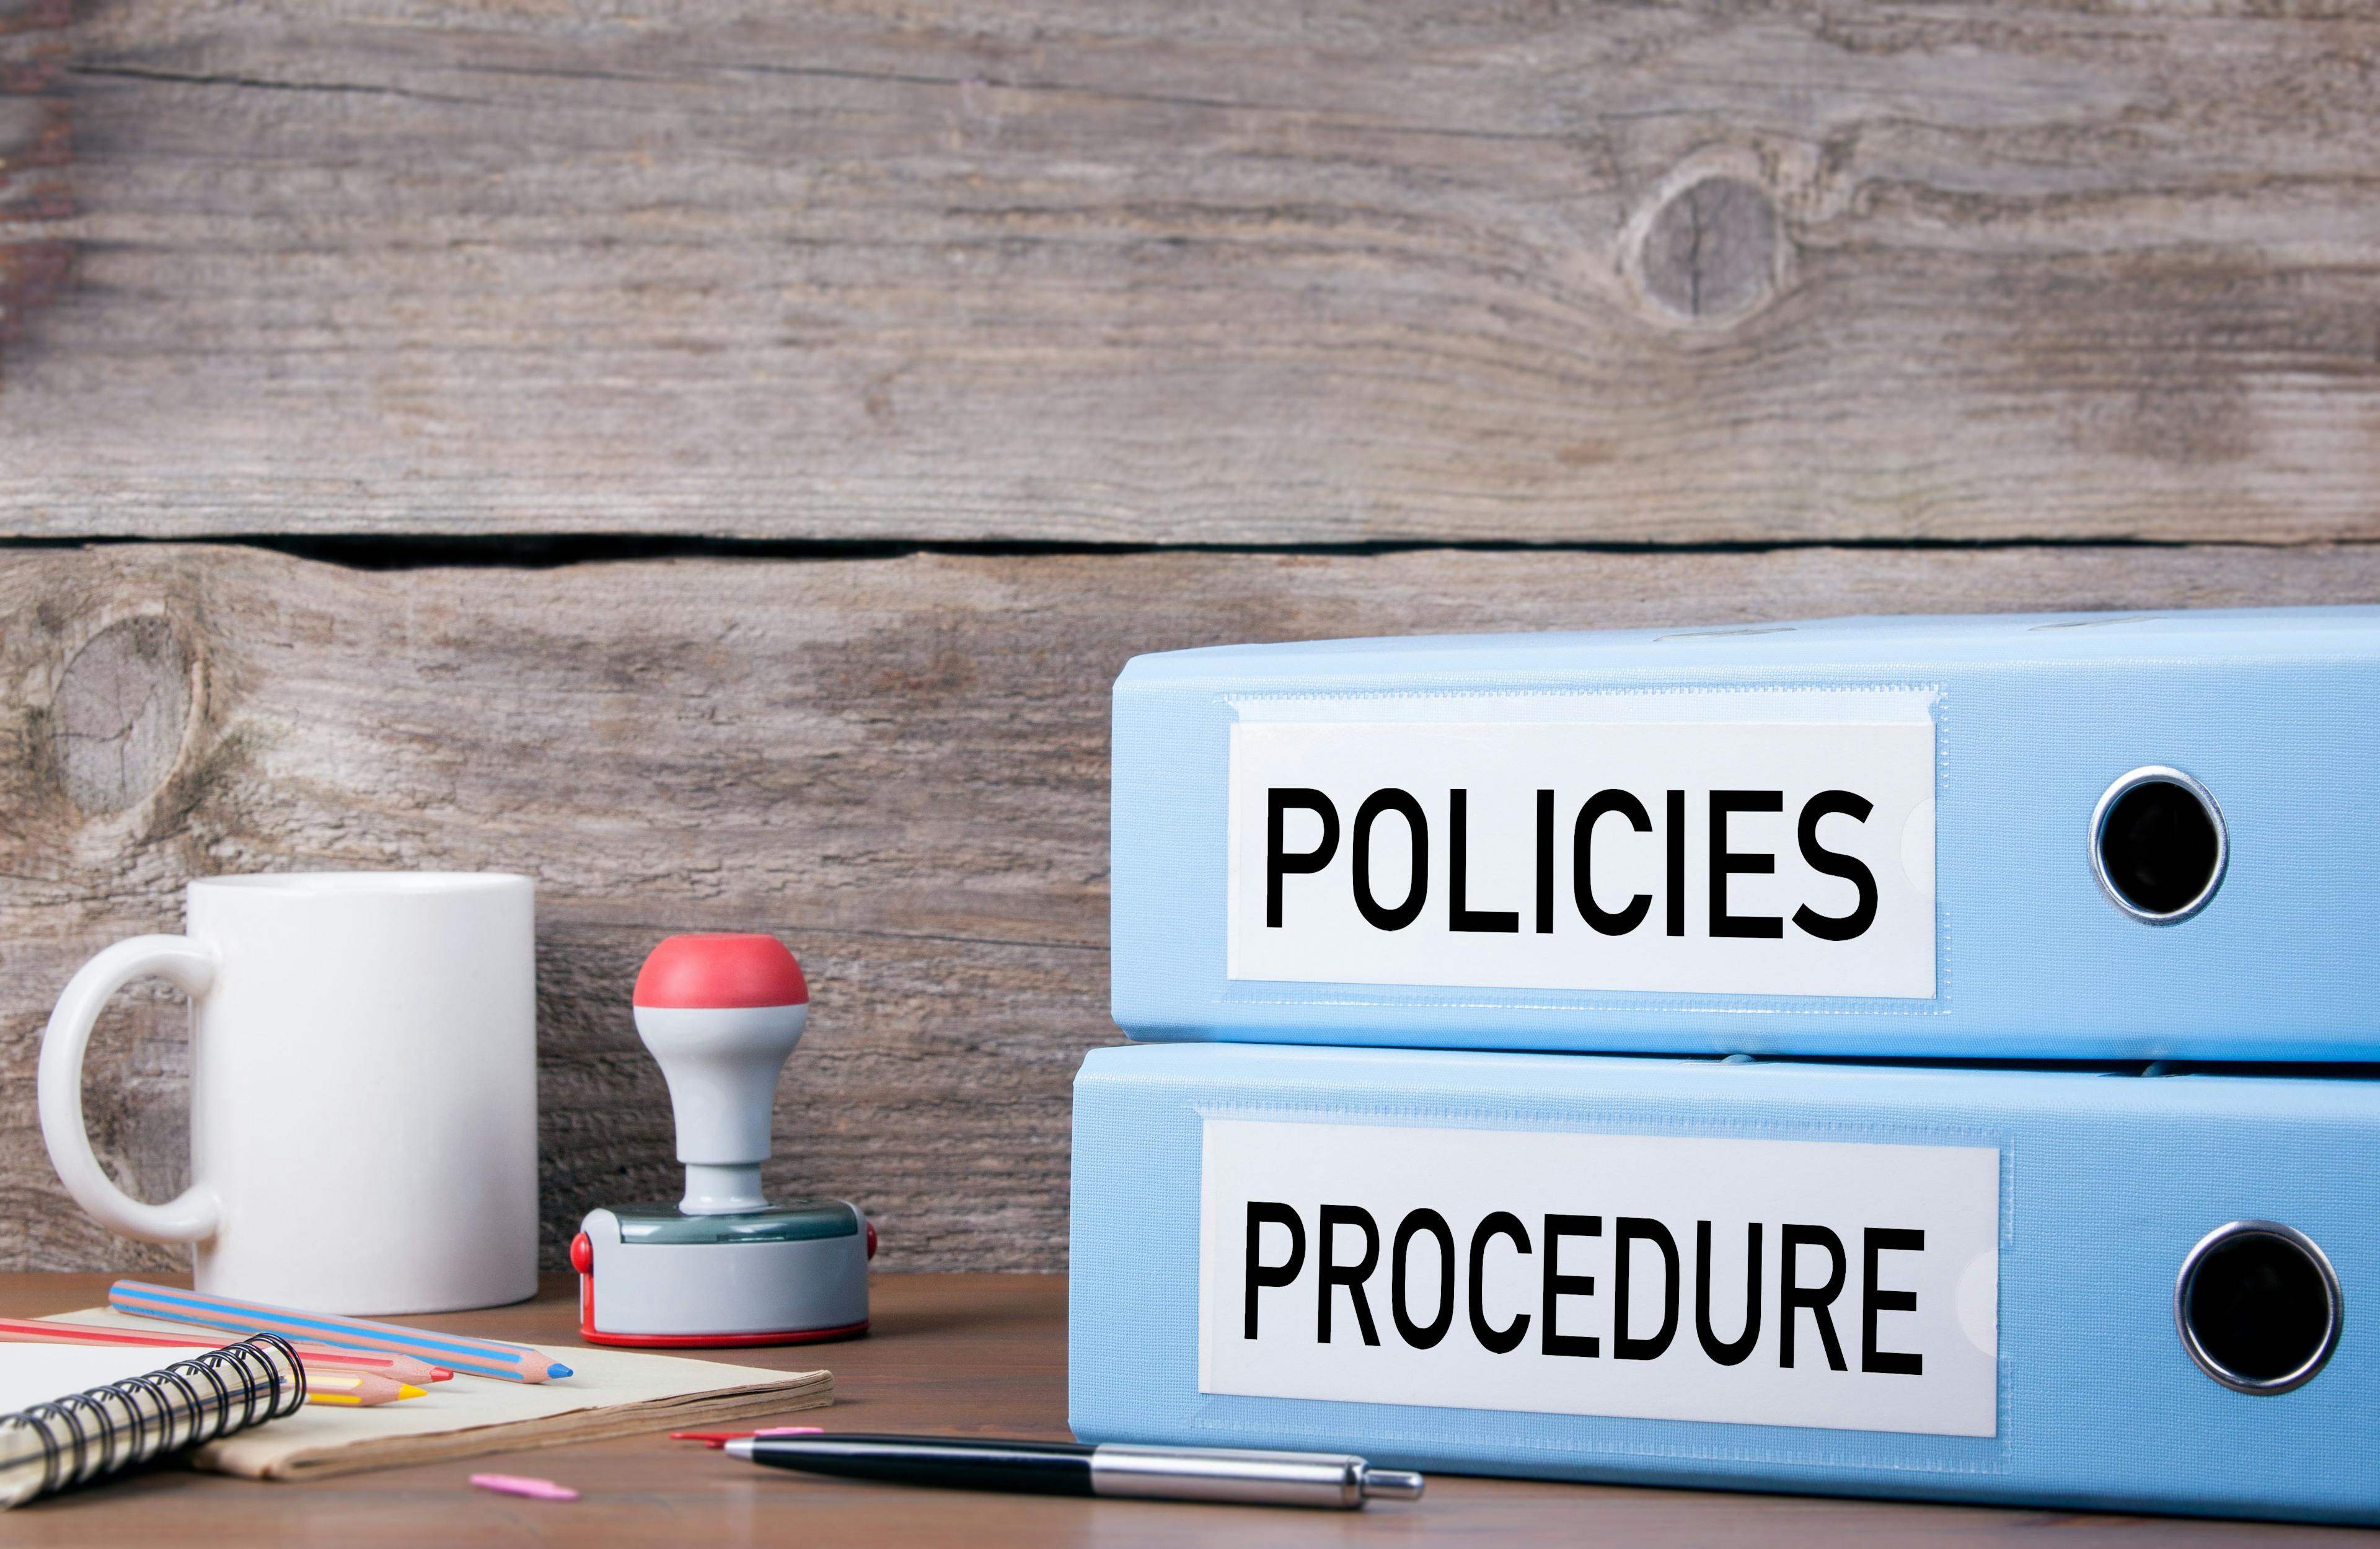 Policies and procedure binders -- Image credit: STOATPHOTO | stock.adobe.com